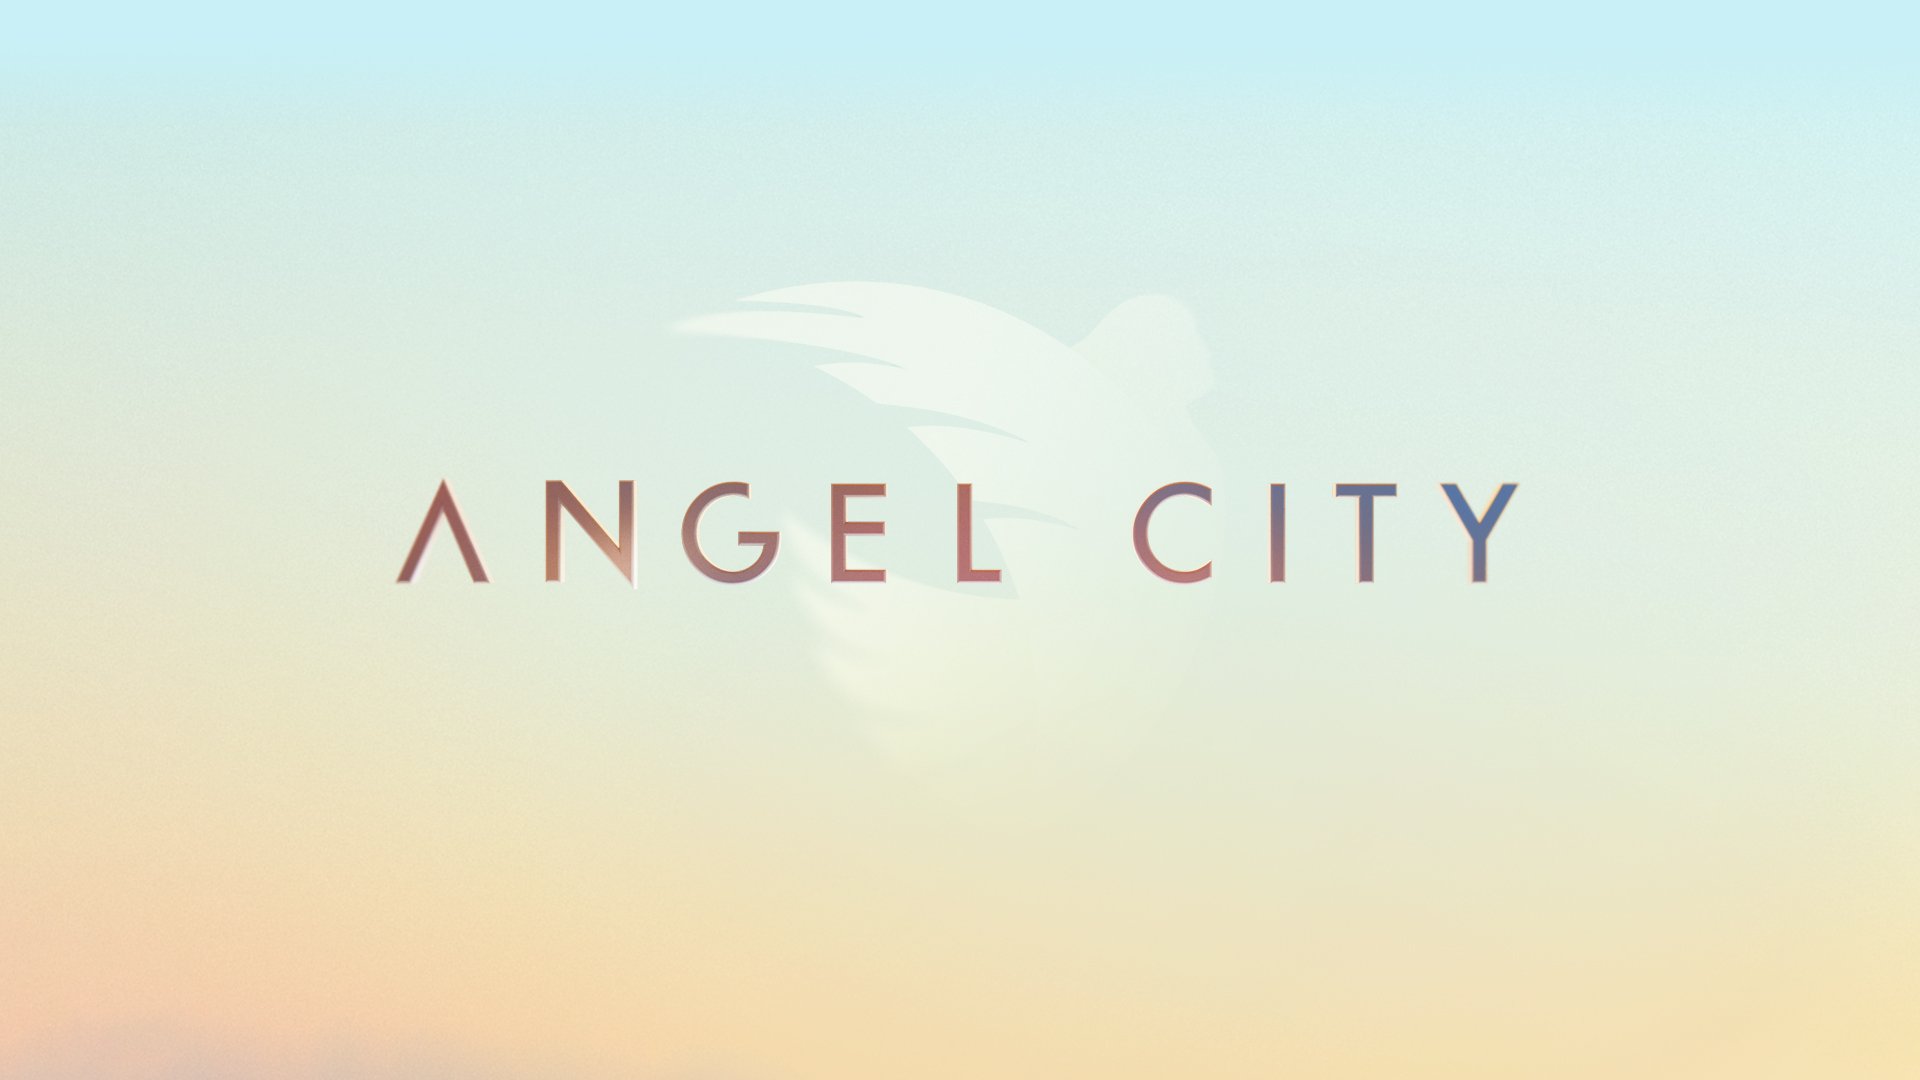 Angel-city-v10-02.jpg